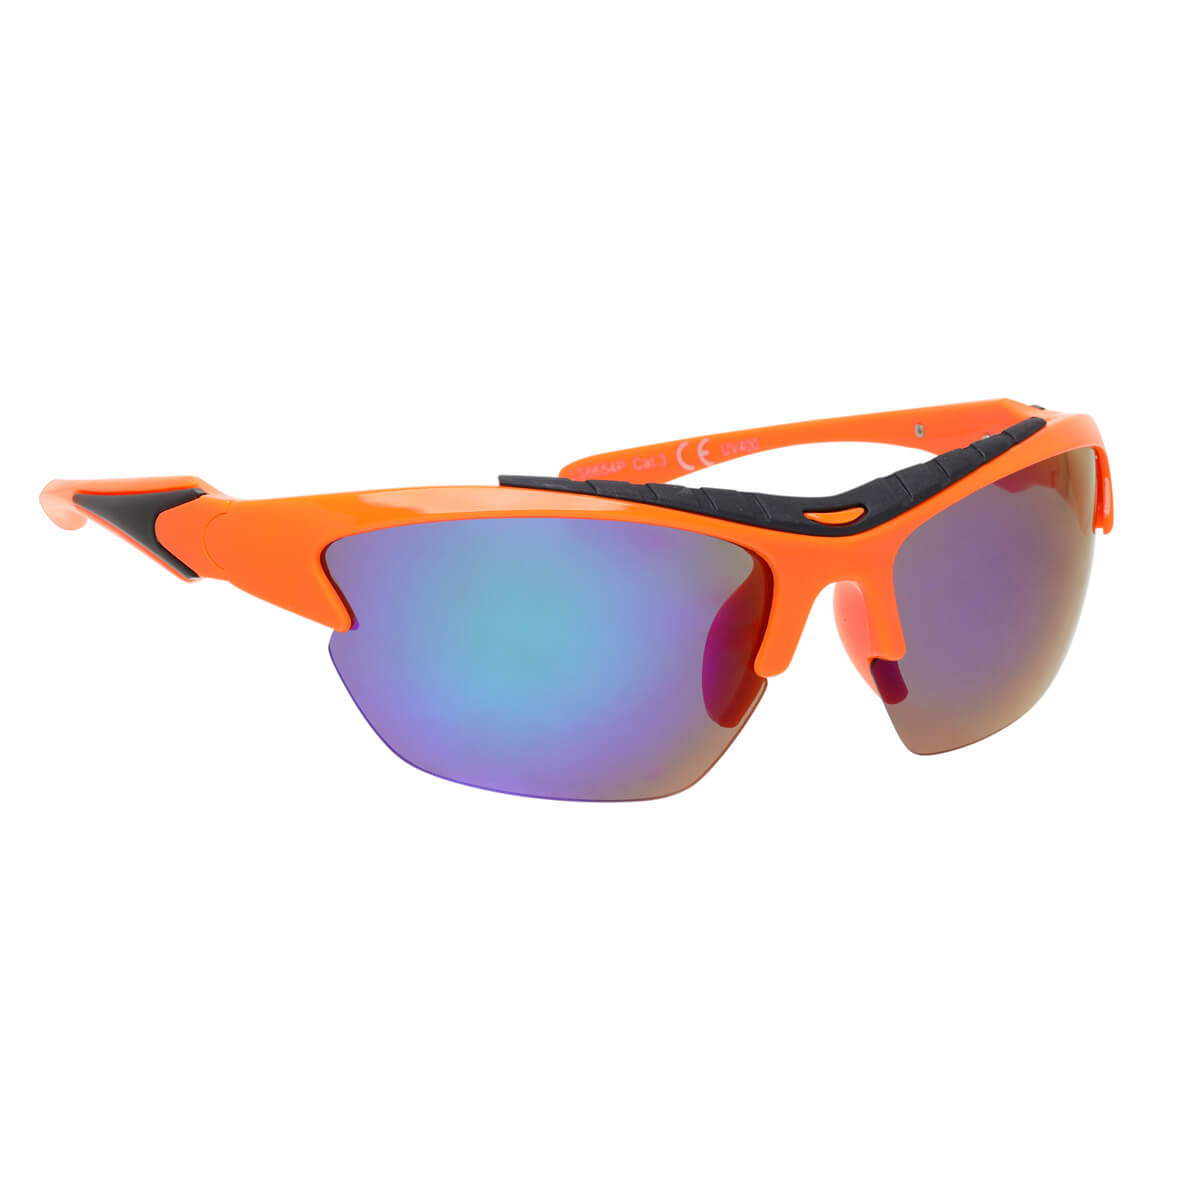 Polarized sports sunglasses